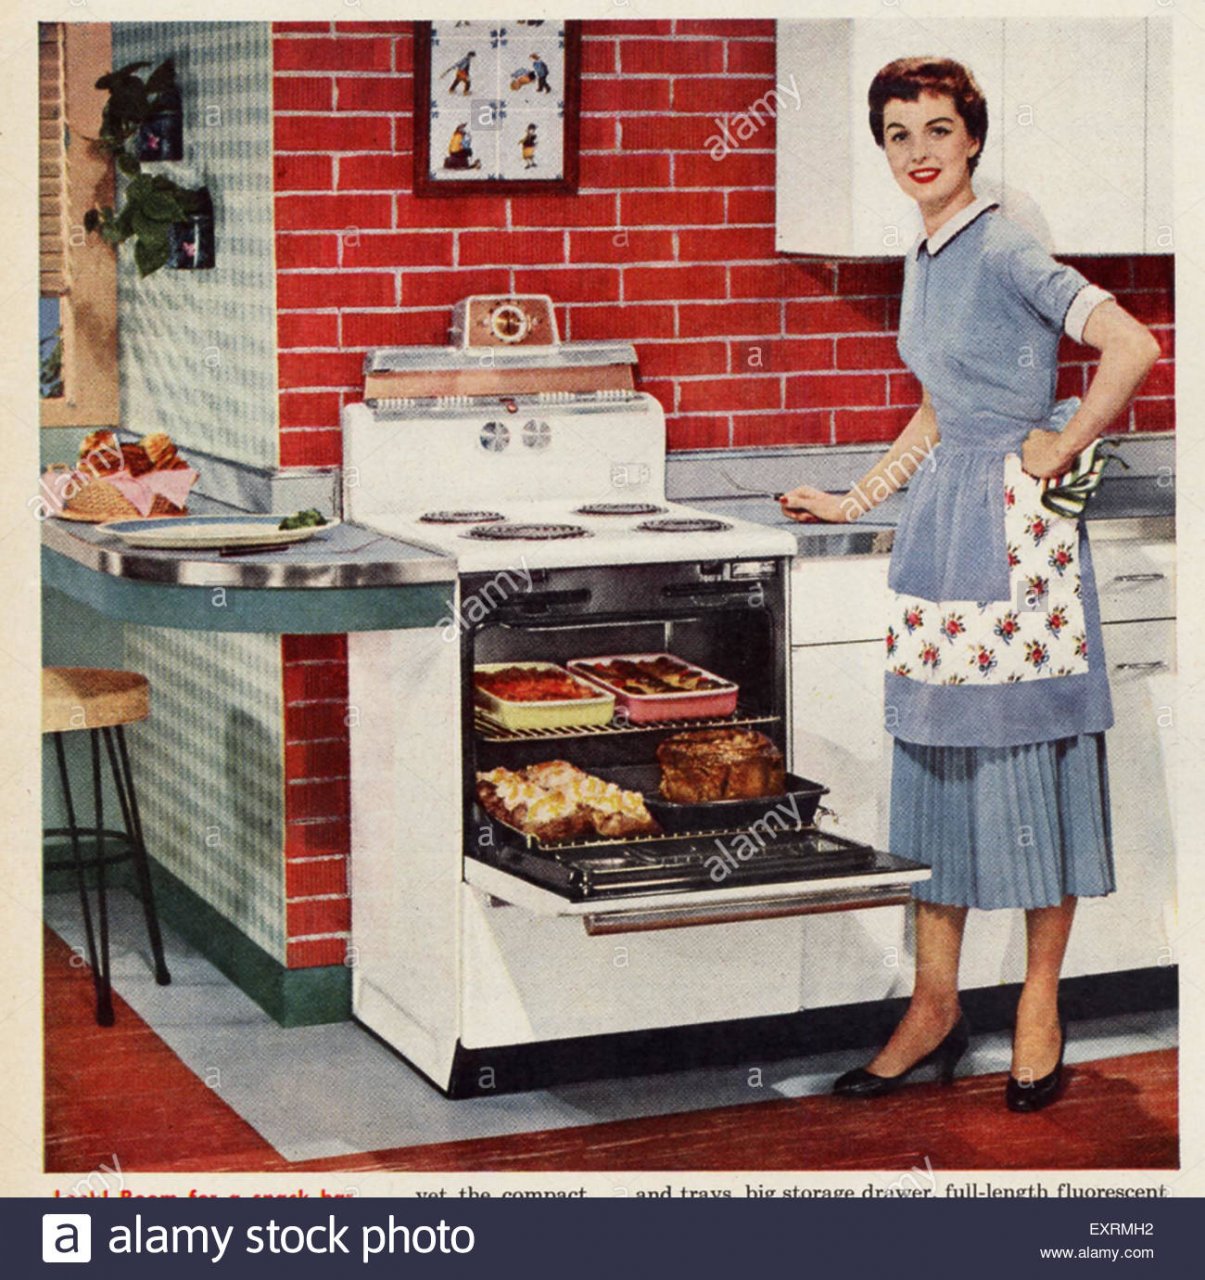 1950s-usa-housewife-cooking-magazine-advert-de.jpg